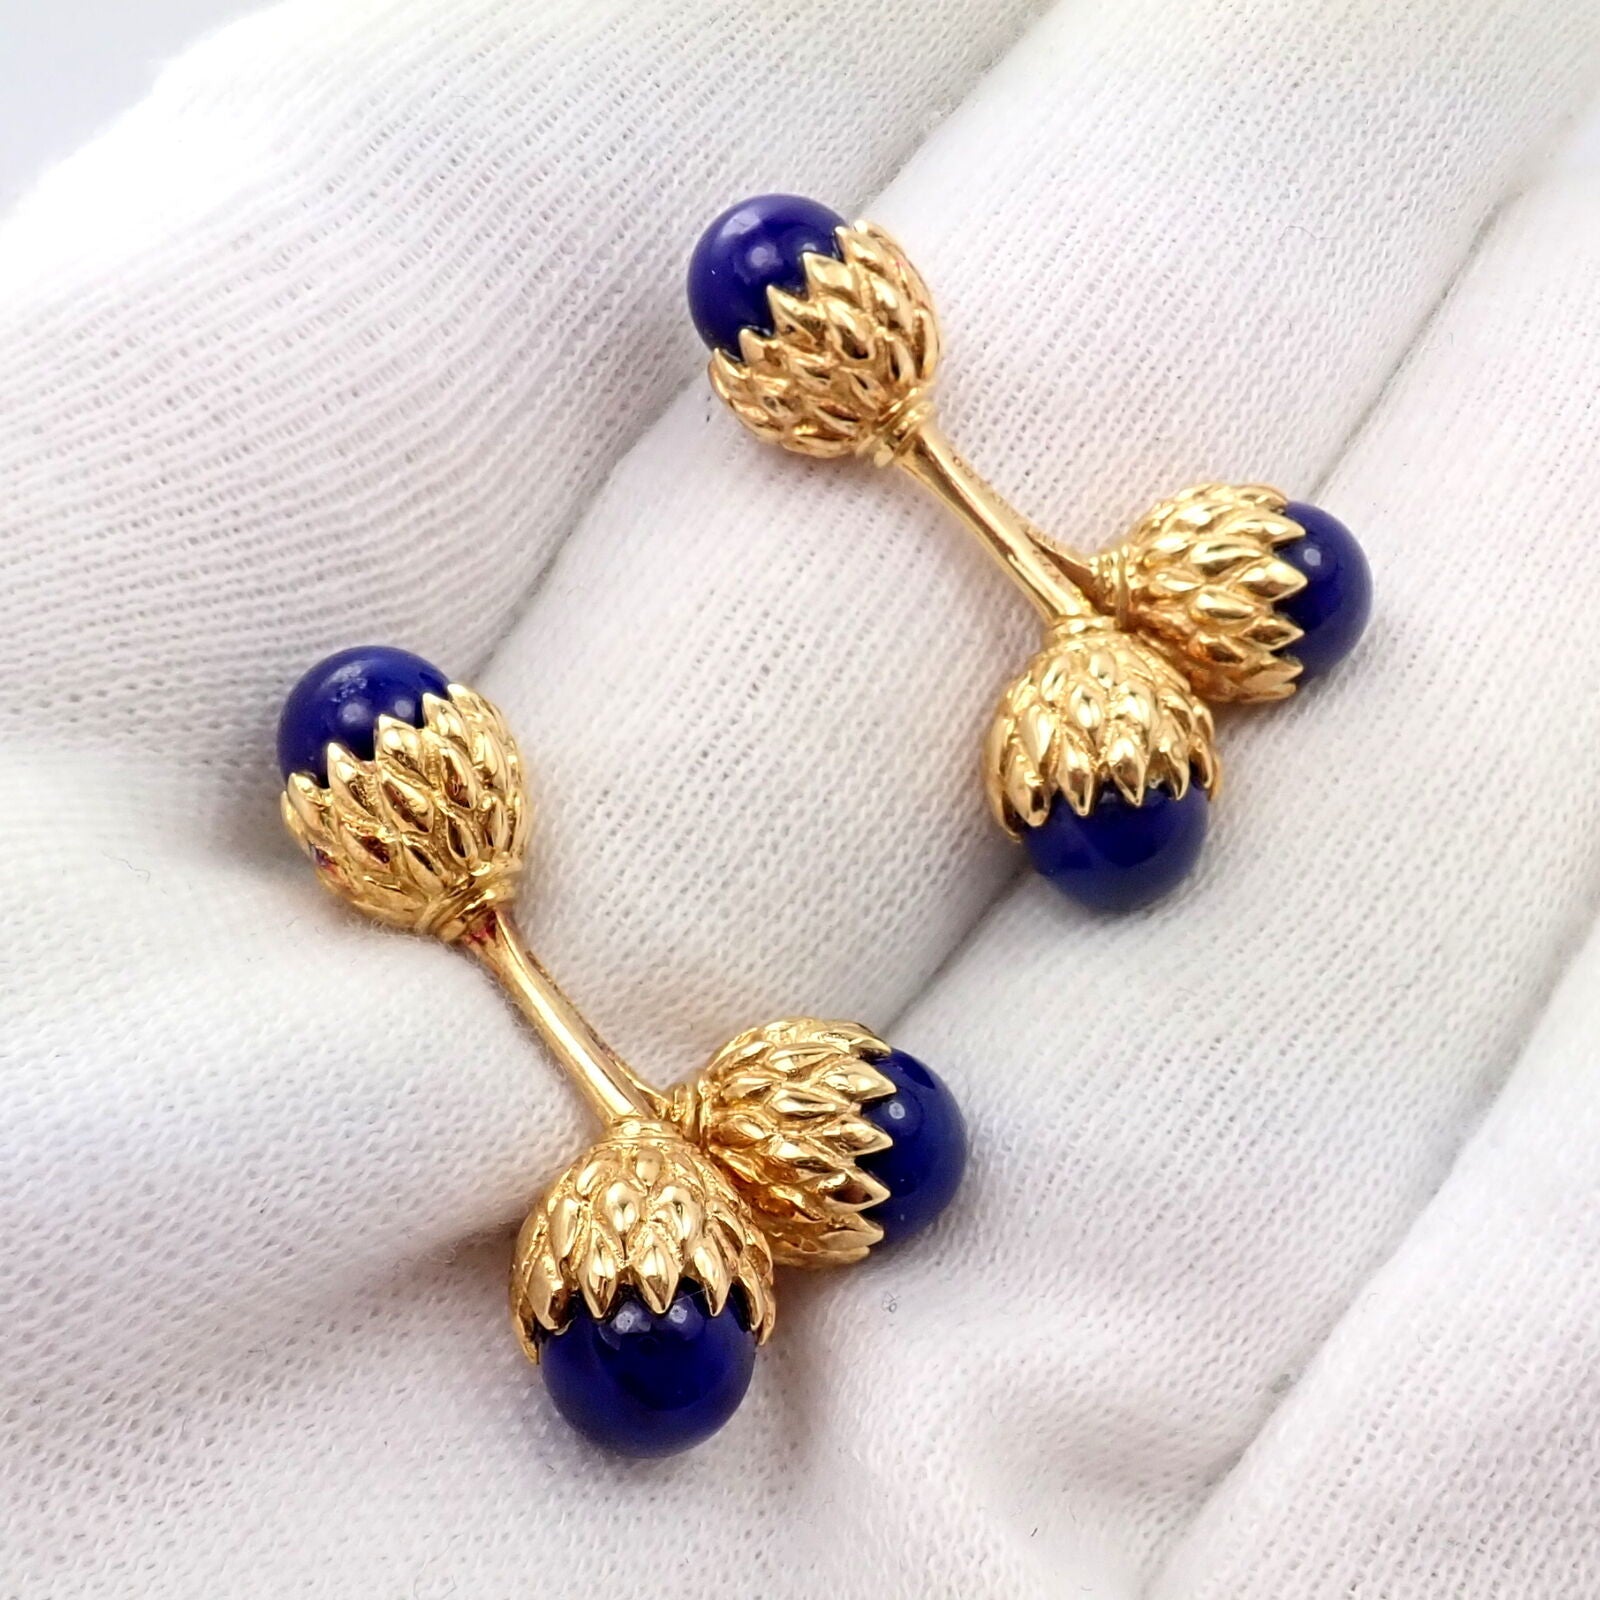 Tiffany & Co. Jewelry & Watches:Men's Jewelry:Cufflinks Tiffany & Co Schlumberger 18k Yellow Gold Lapis Lazuli Double Acorn Cufflinks